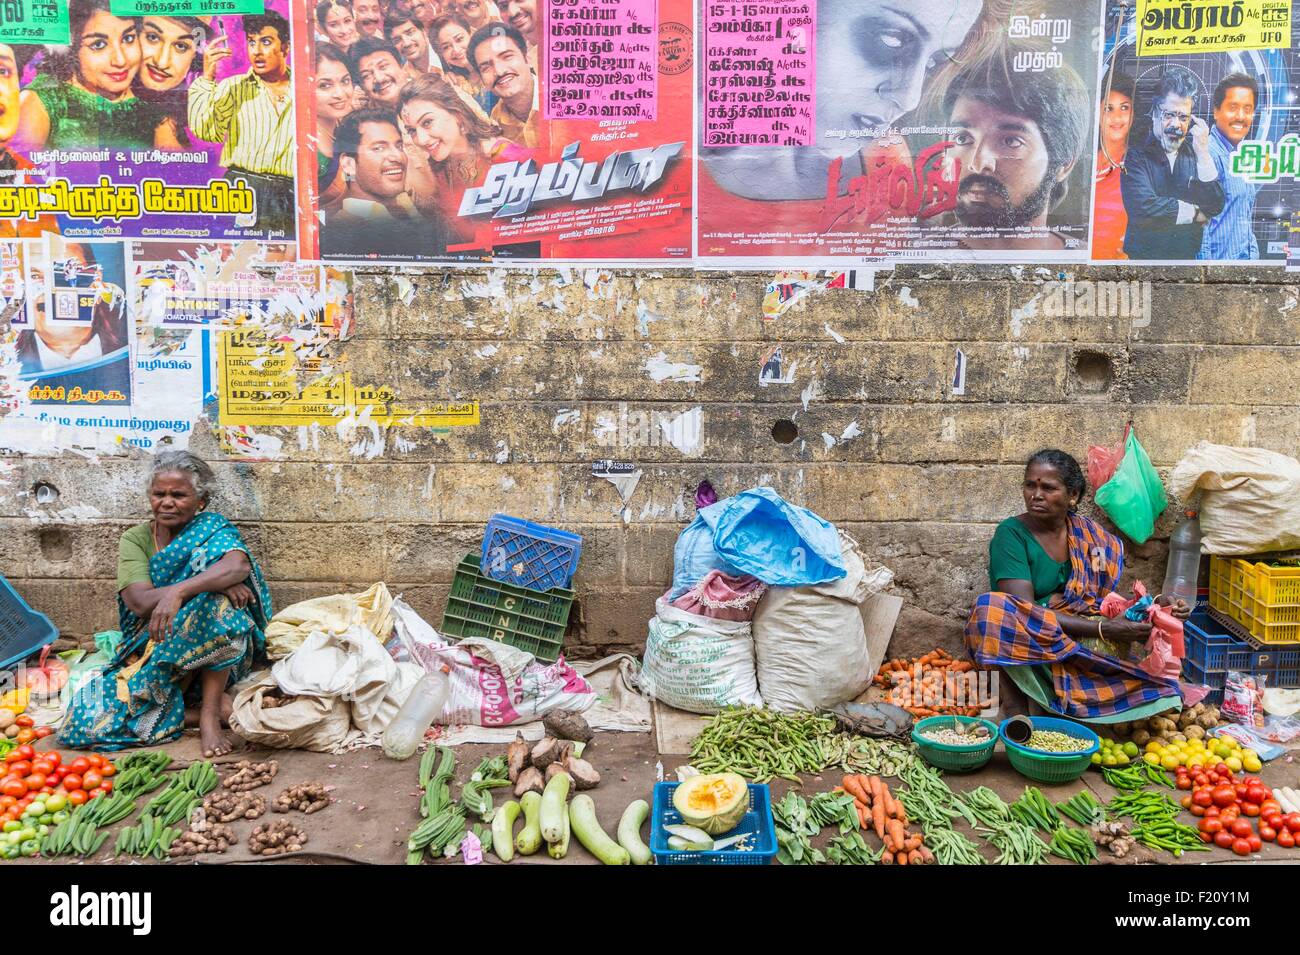 India, Tamil Nadu state, Madurai, street scene Stock Photo